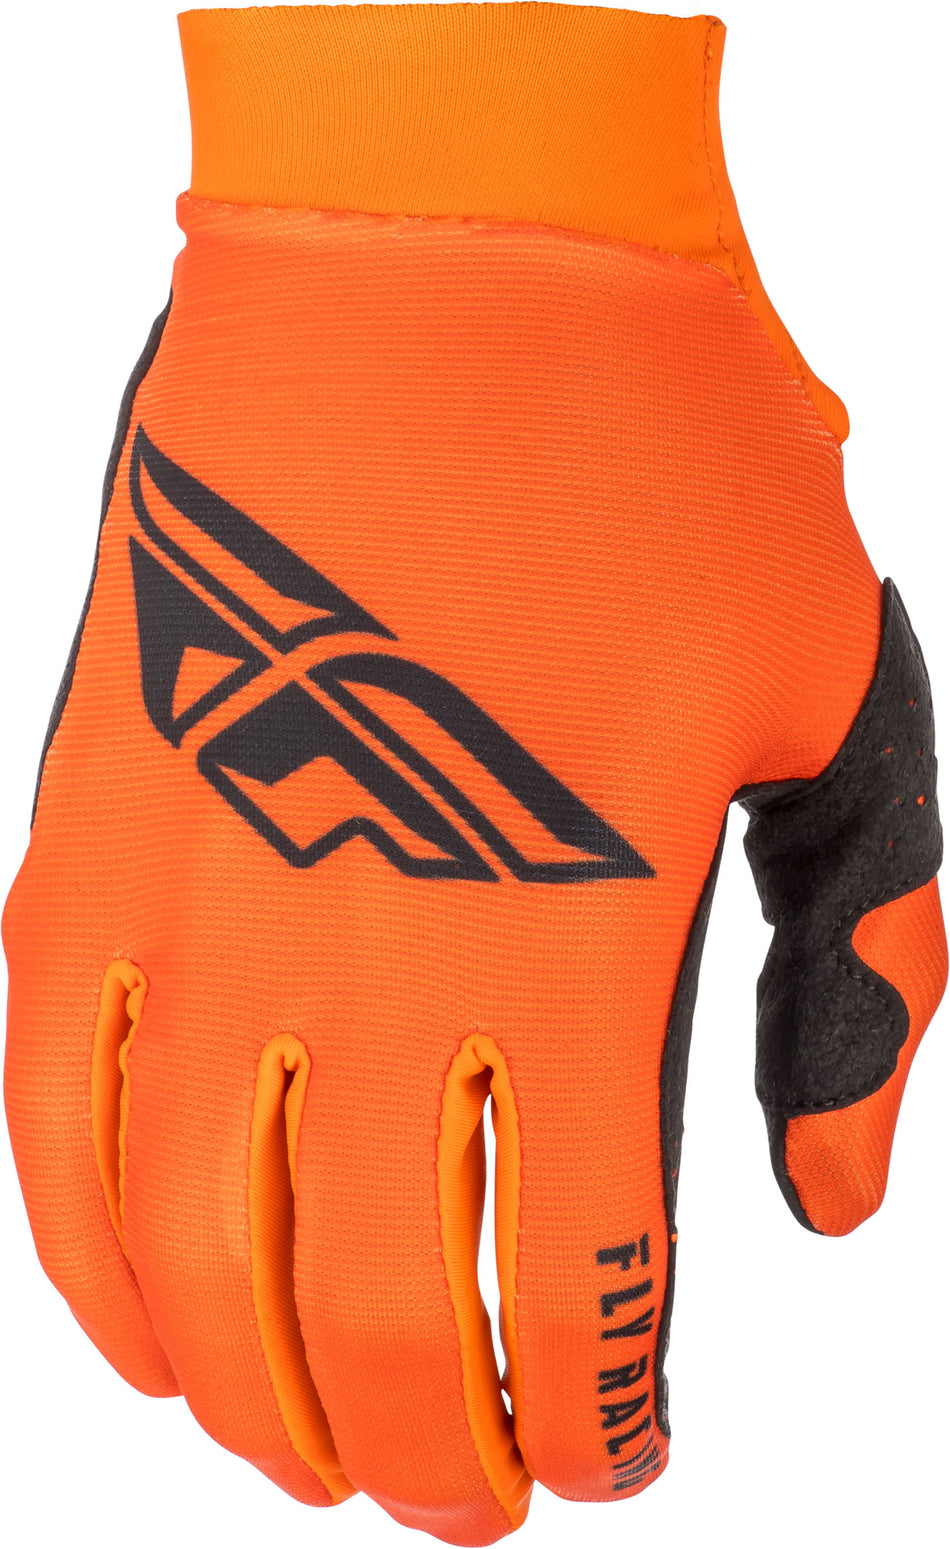 FLY RACING Pro Lite Gloves Orange/Black Sz 11 372-81711